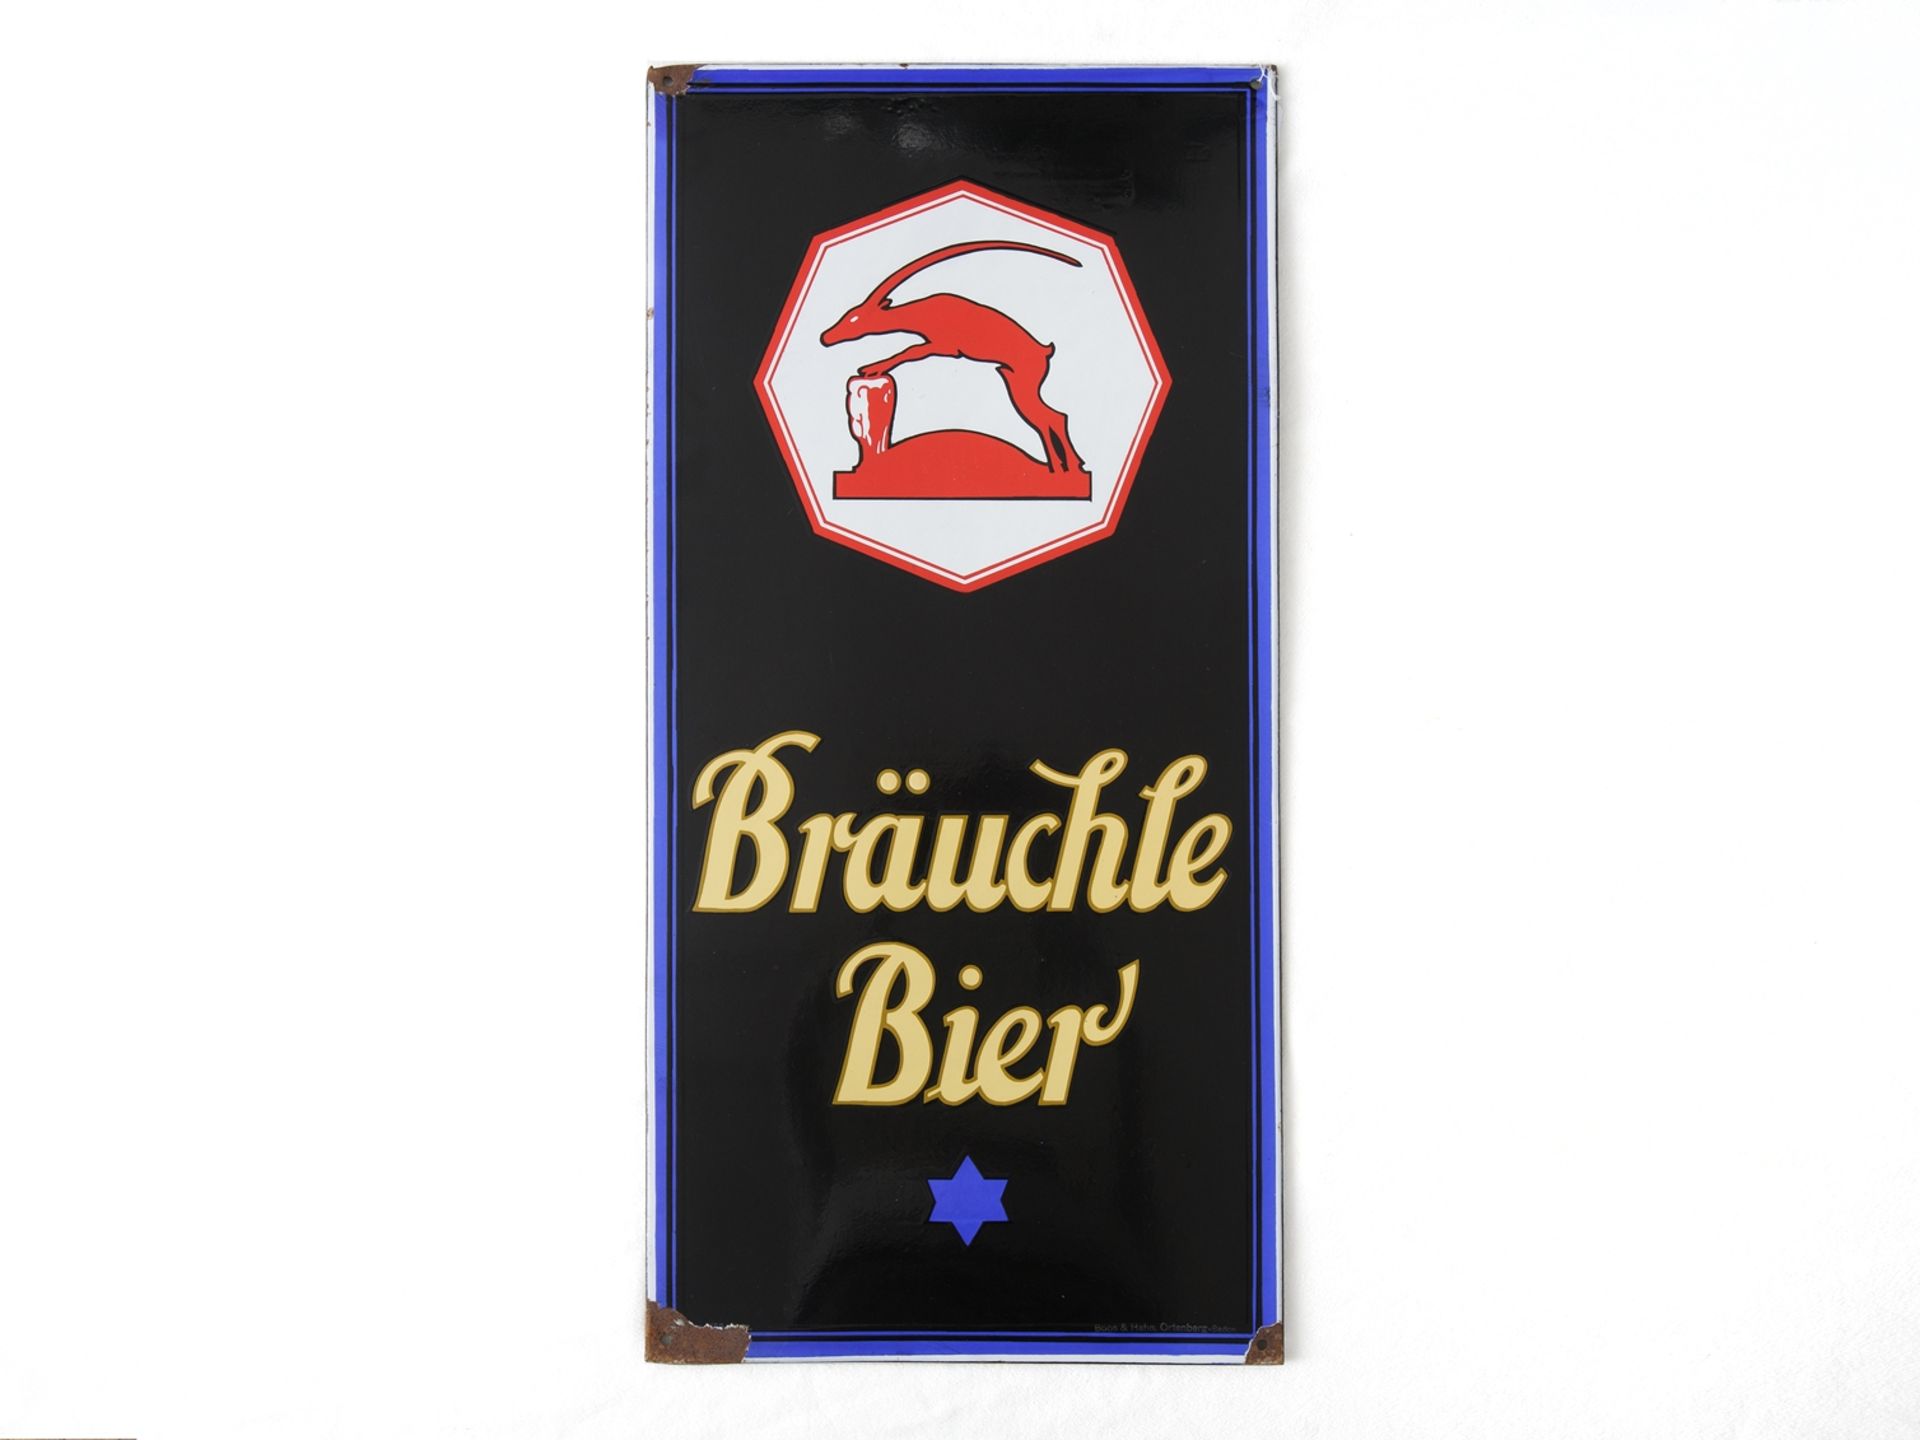 Enamel sign Bräuchle Bier, Metzingen around 1950 - Image 7 of 7